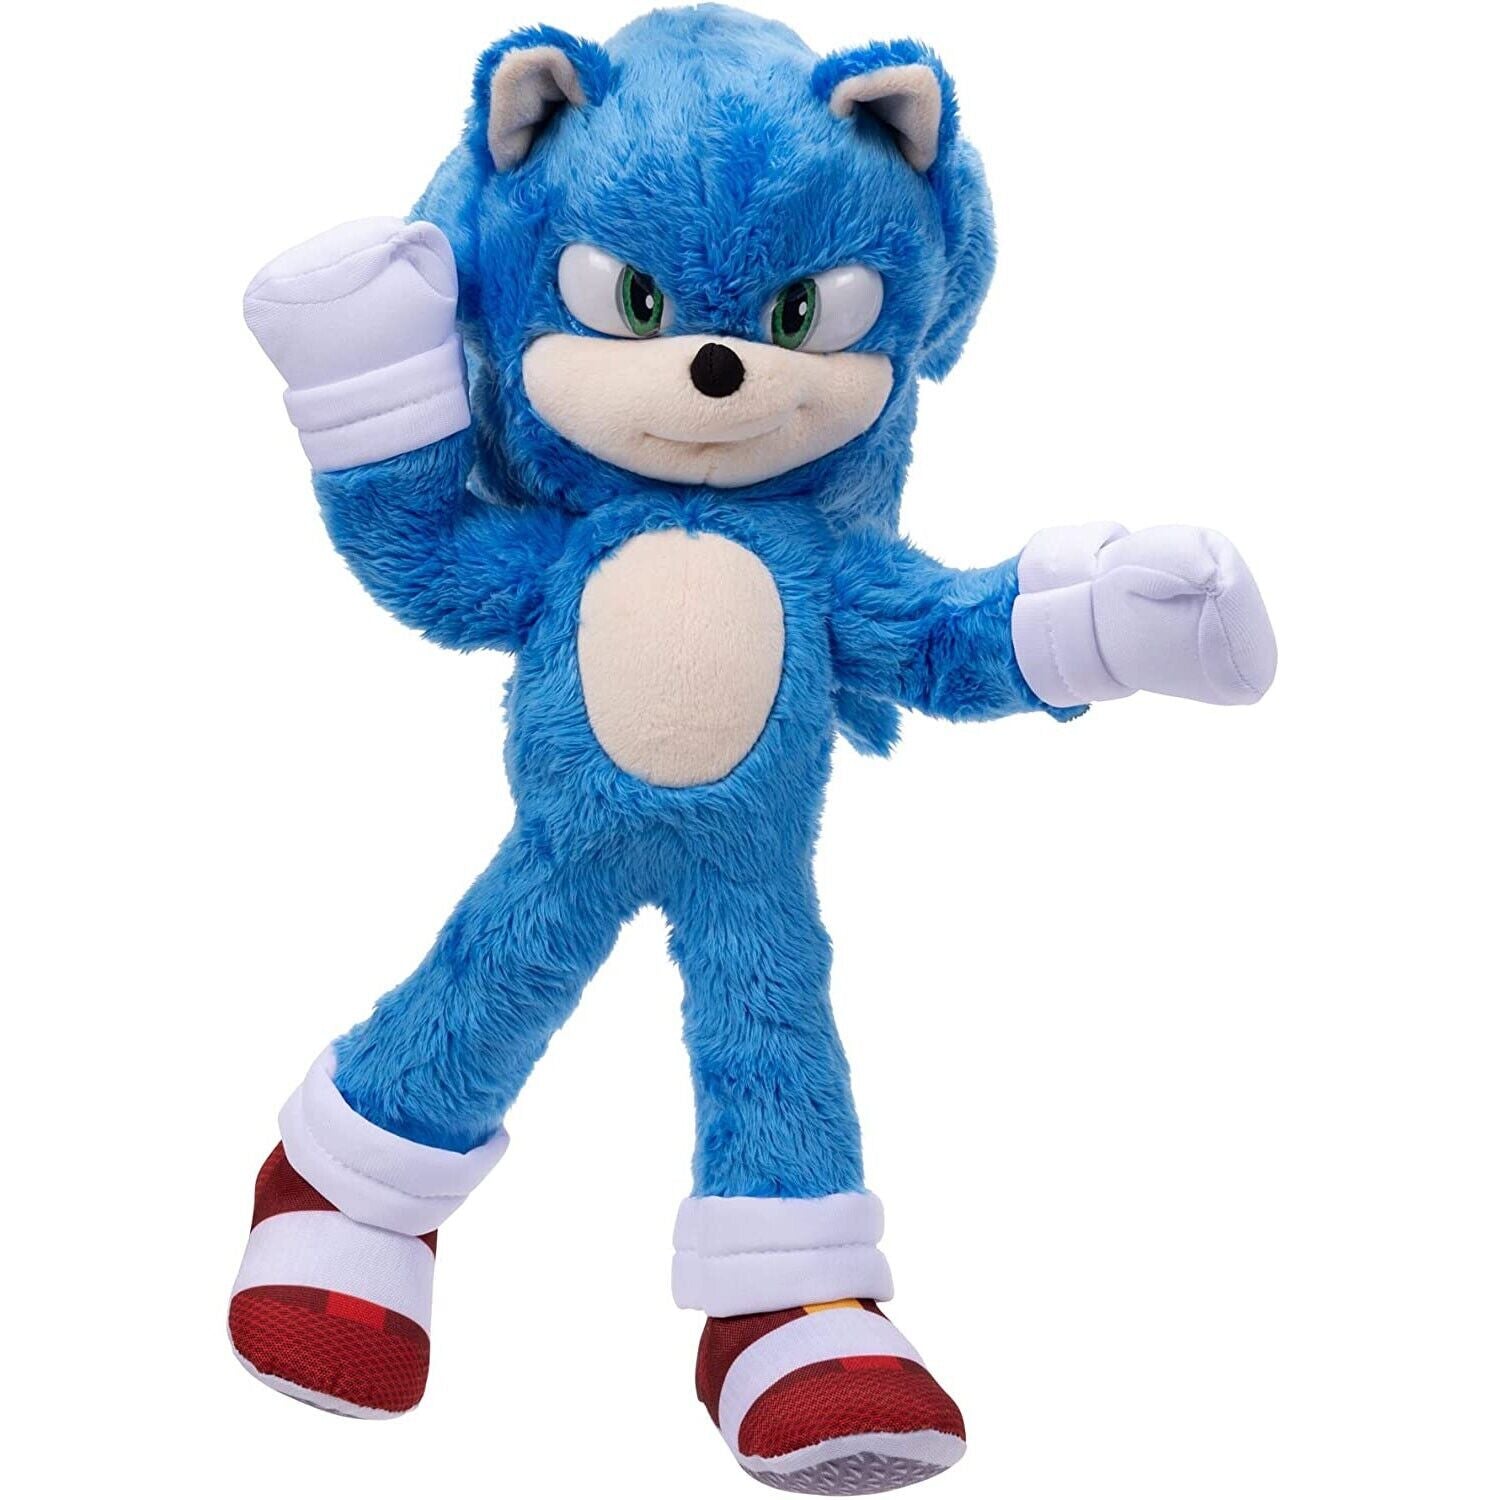 BRAND NEW Sonic The Hedgehog 2 Movie 13-Inch Premium Plush Sonic